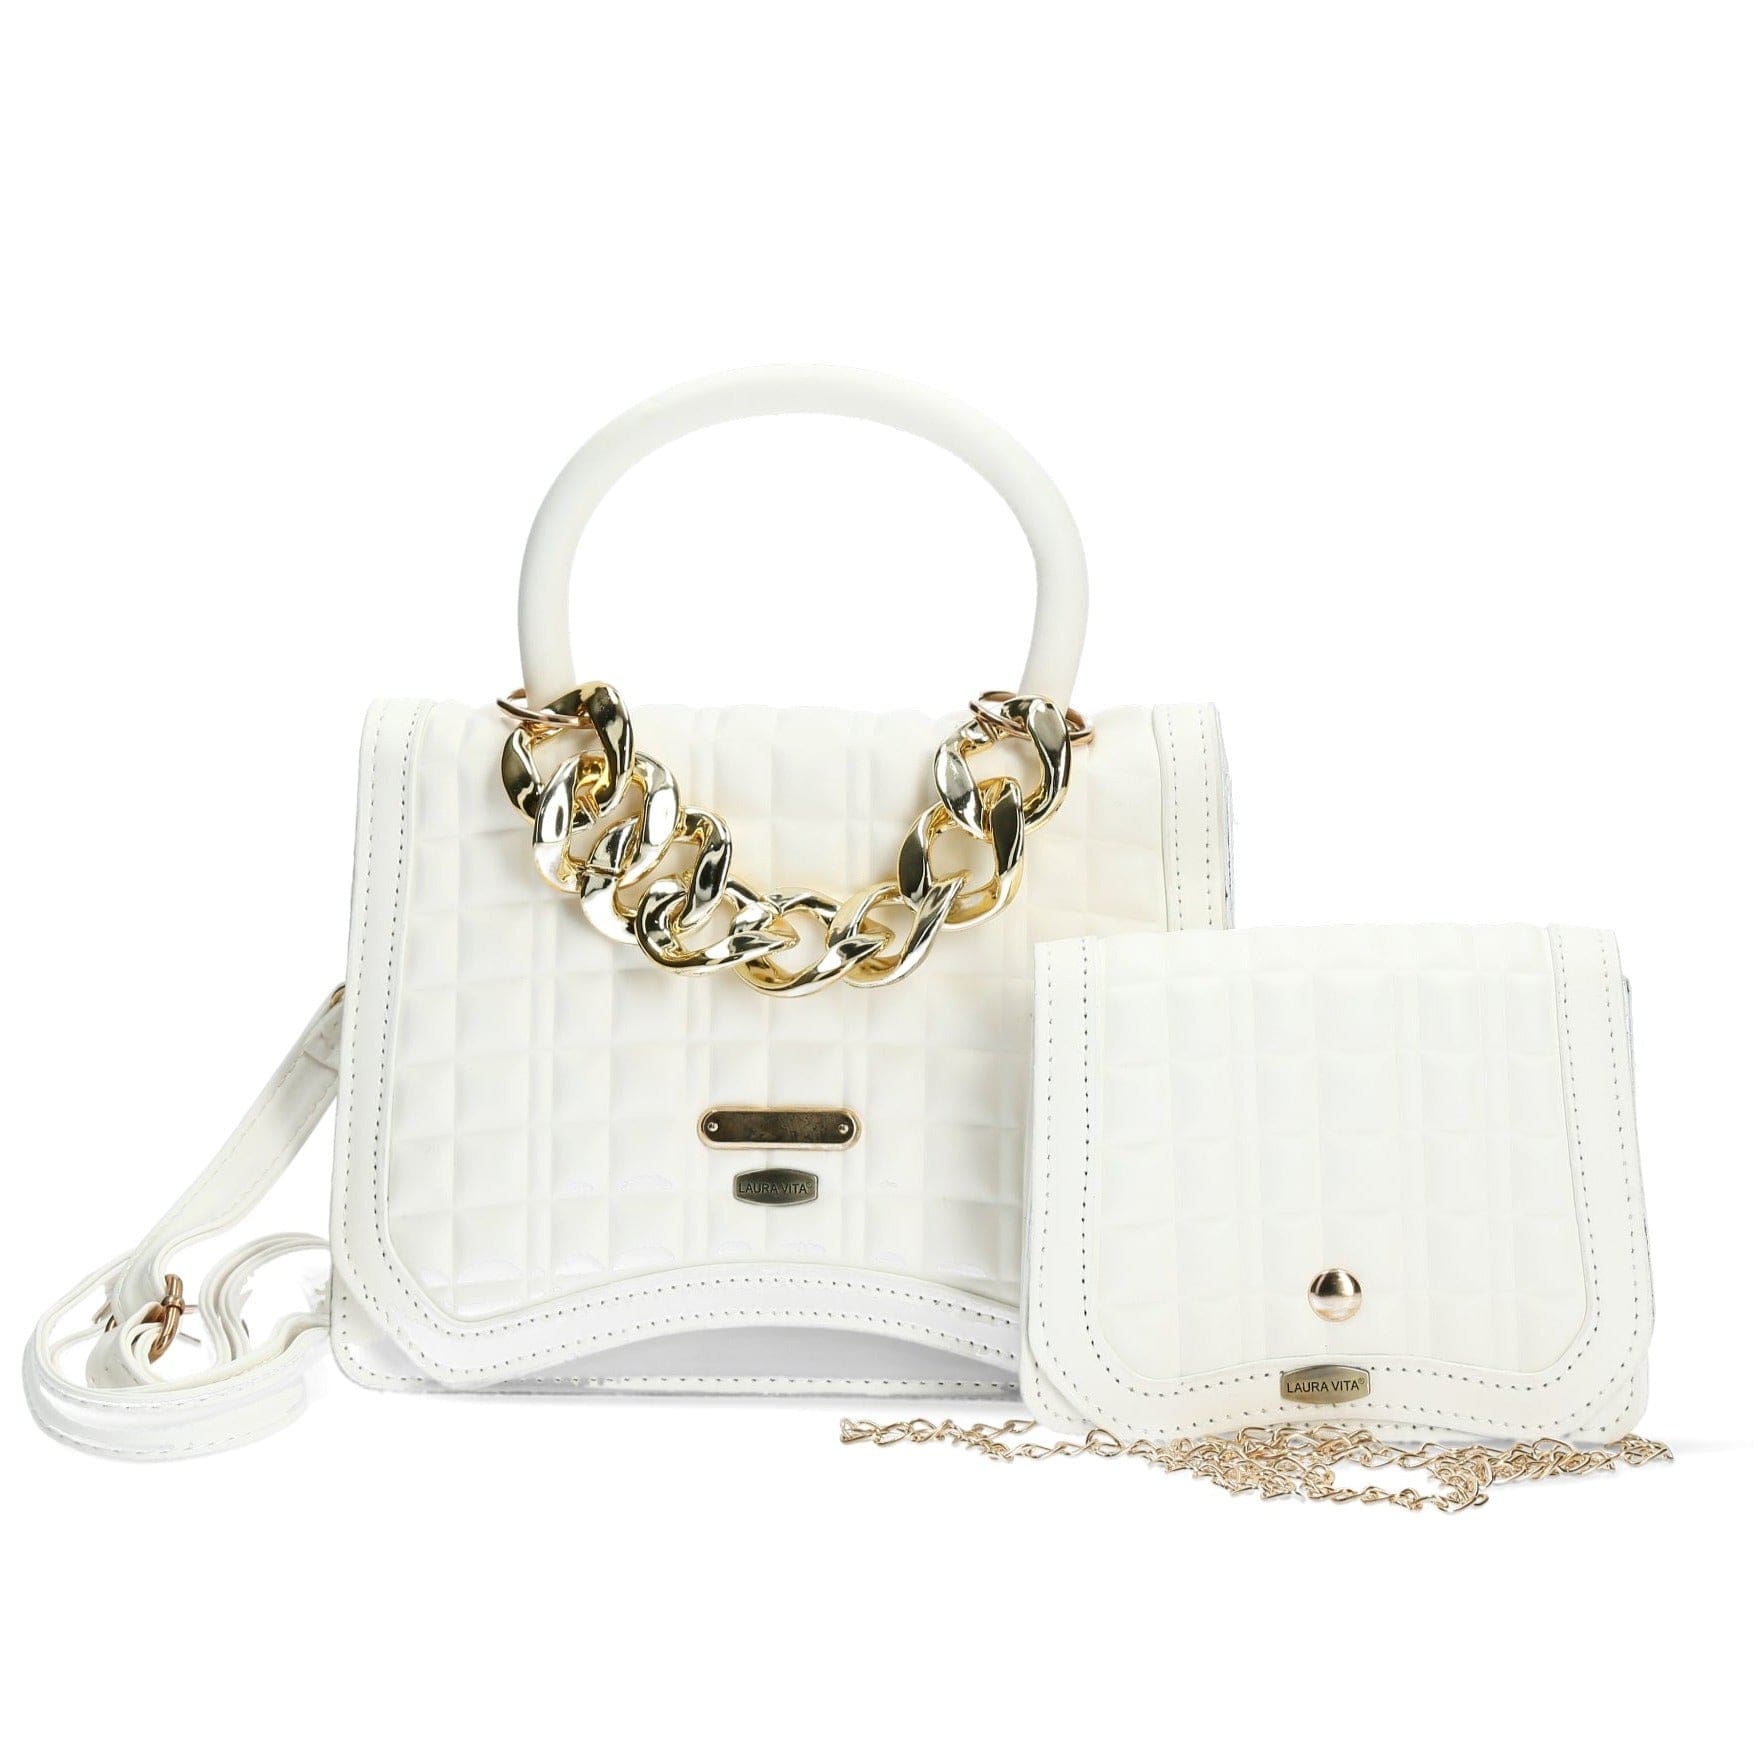 Alamo Square Exclusive Bag - White - Bag